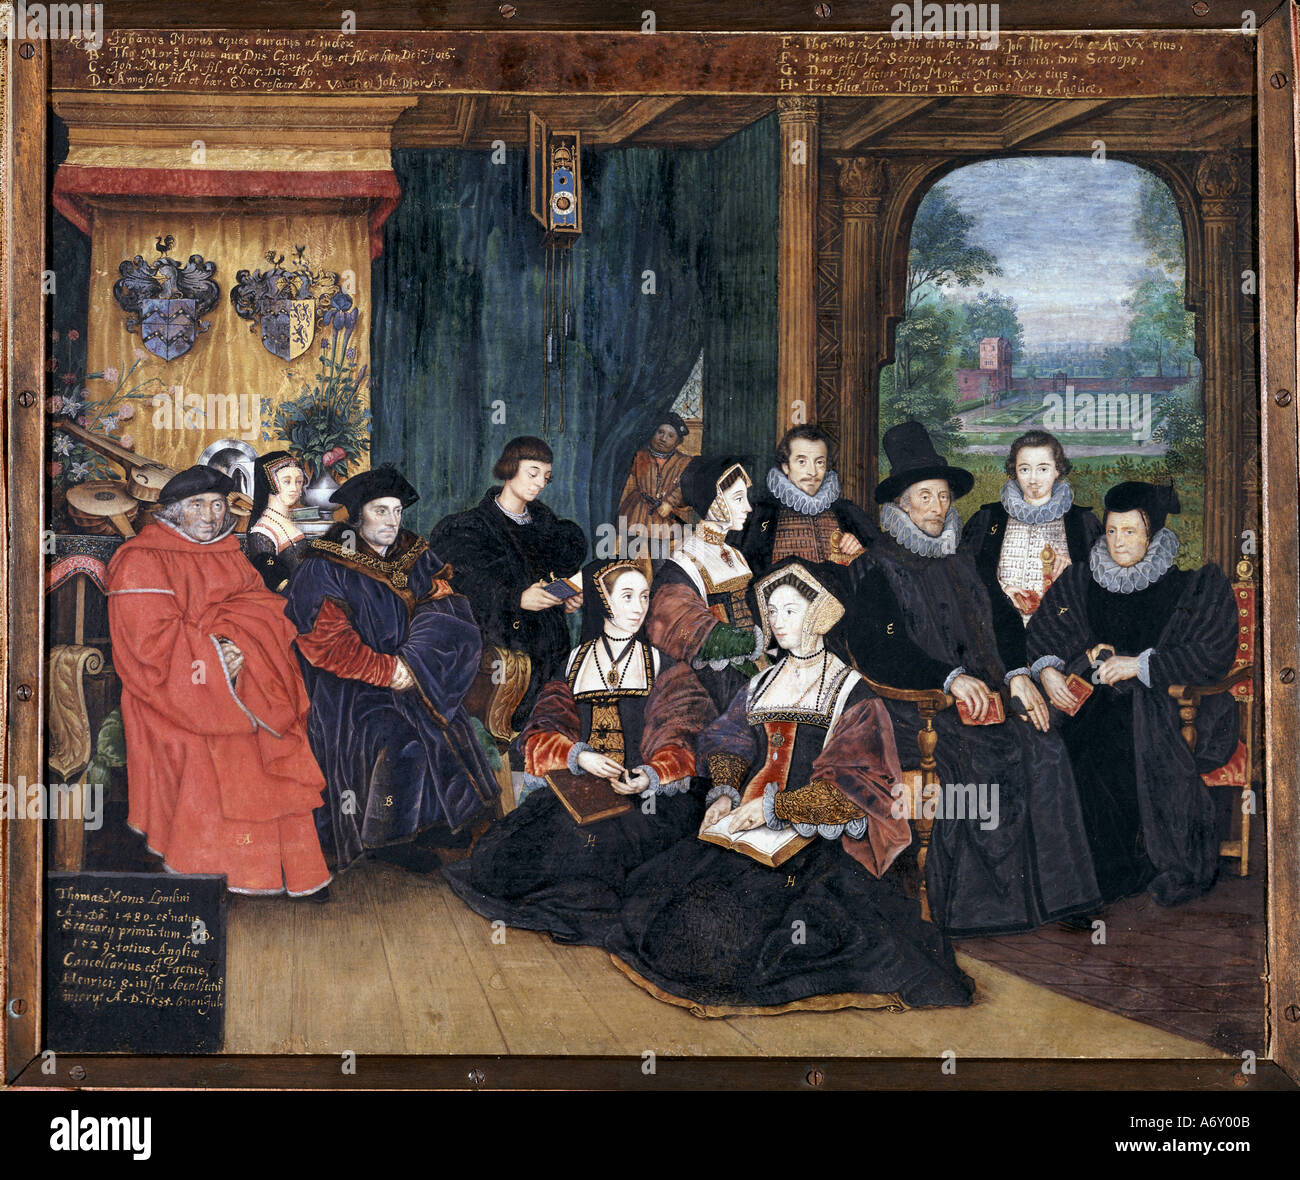 Sir Thomas More and family by Rowland Lockey. London, England, 1594. Stock Photo